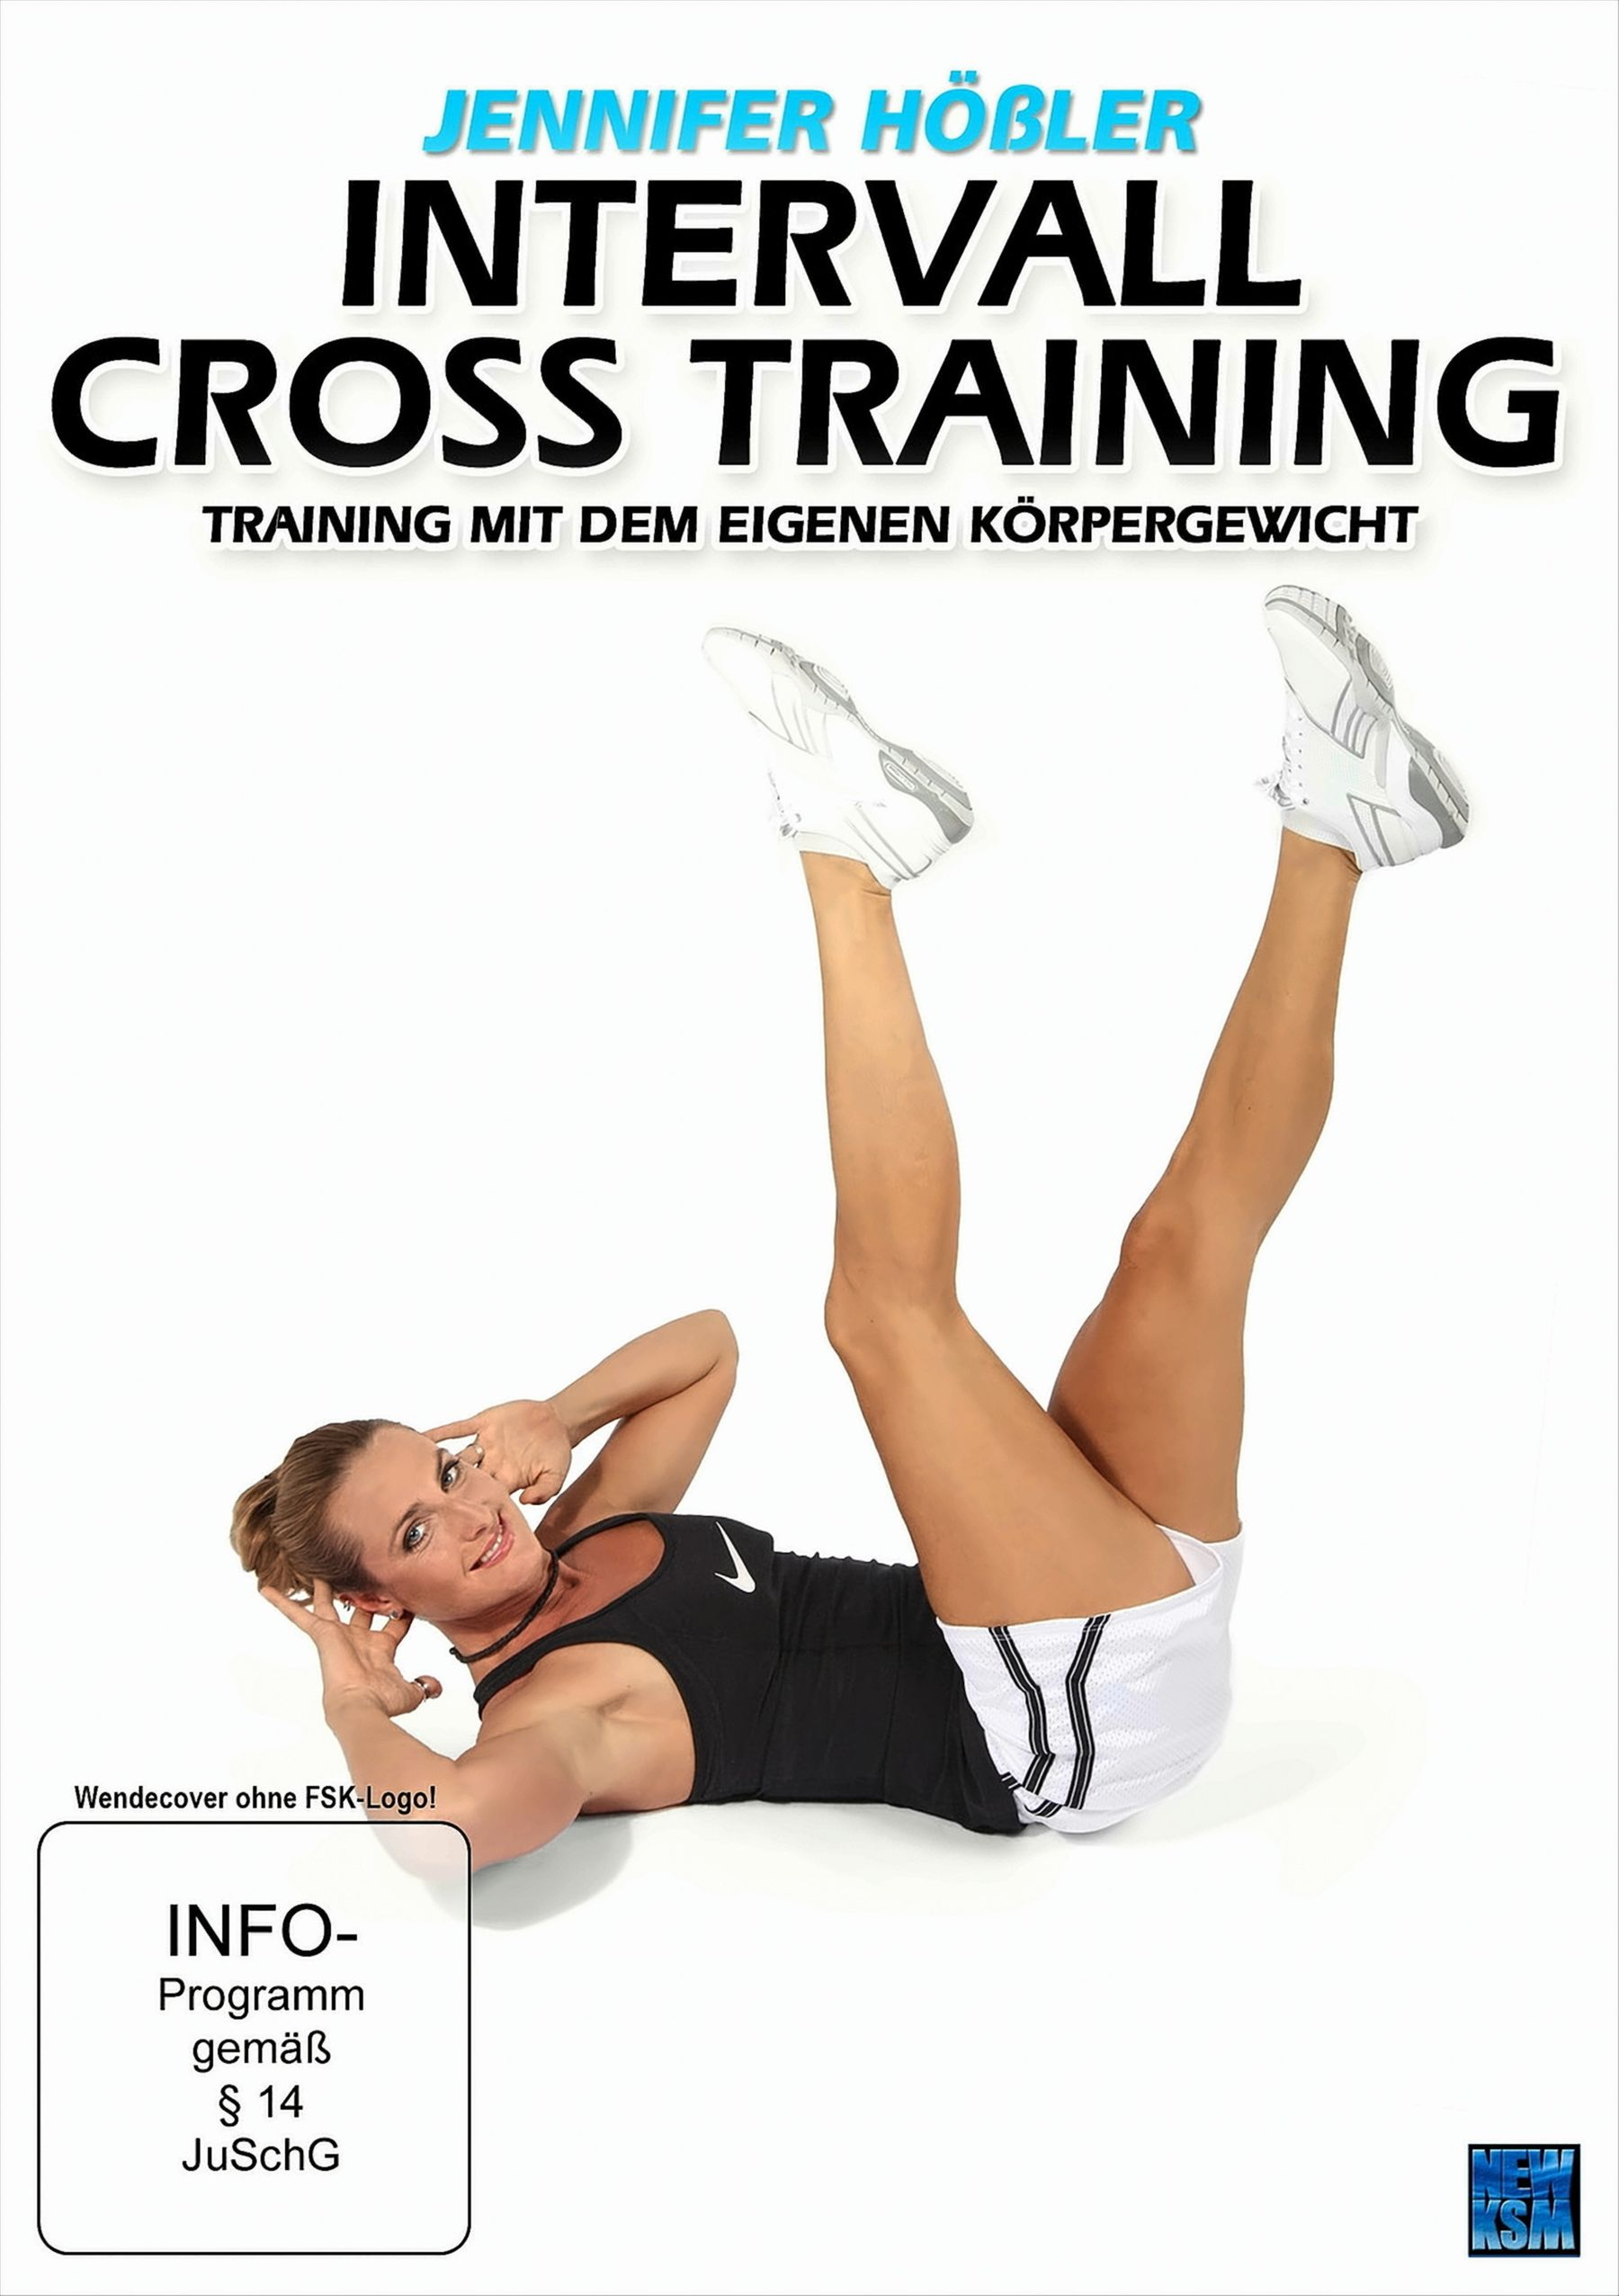 Jennifer Hößler - Training: mit Cross DVD dem eigenen Training Körpergewicht Intervall